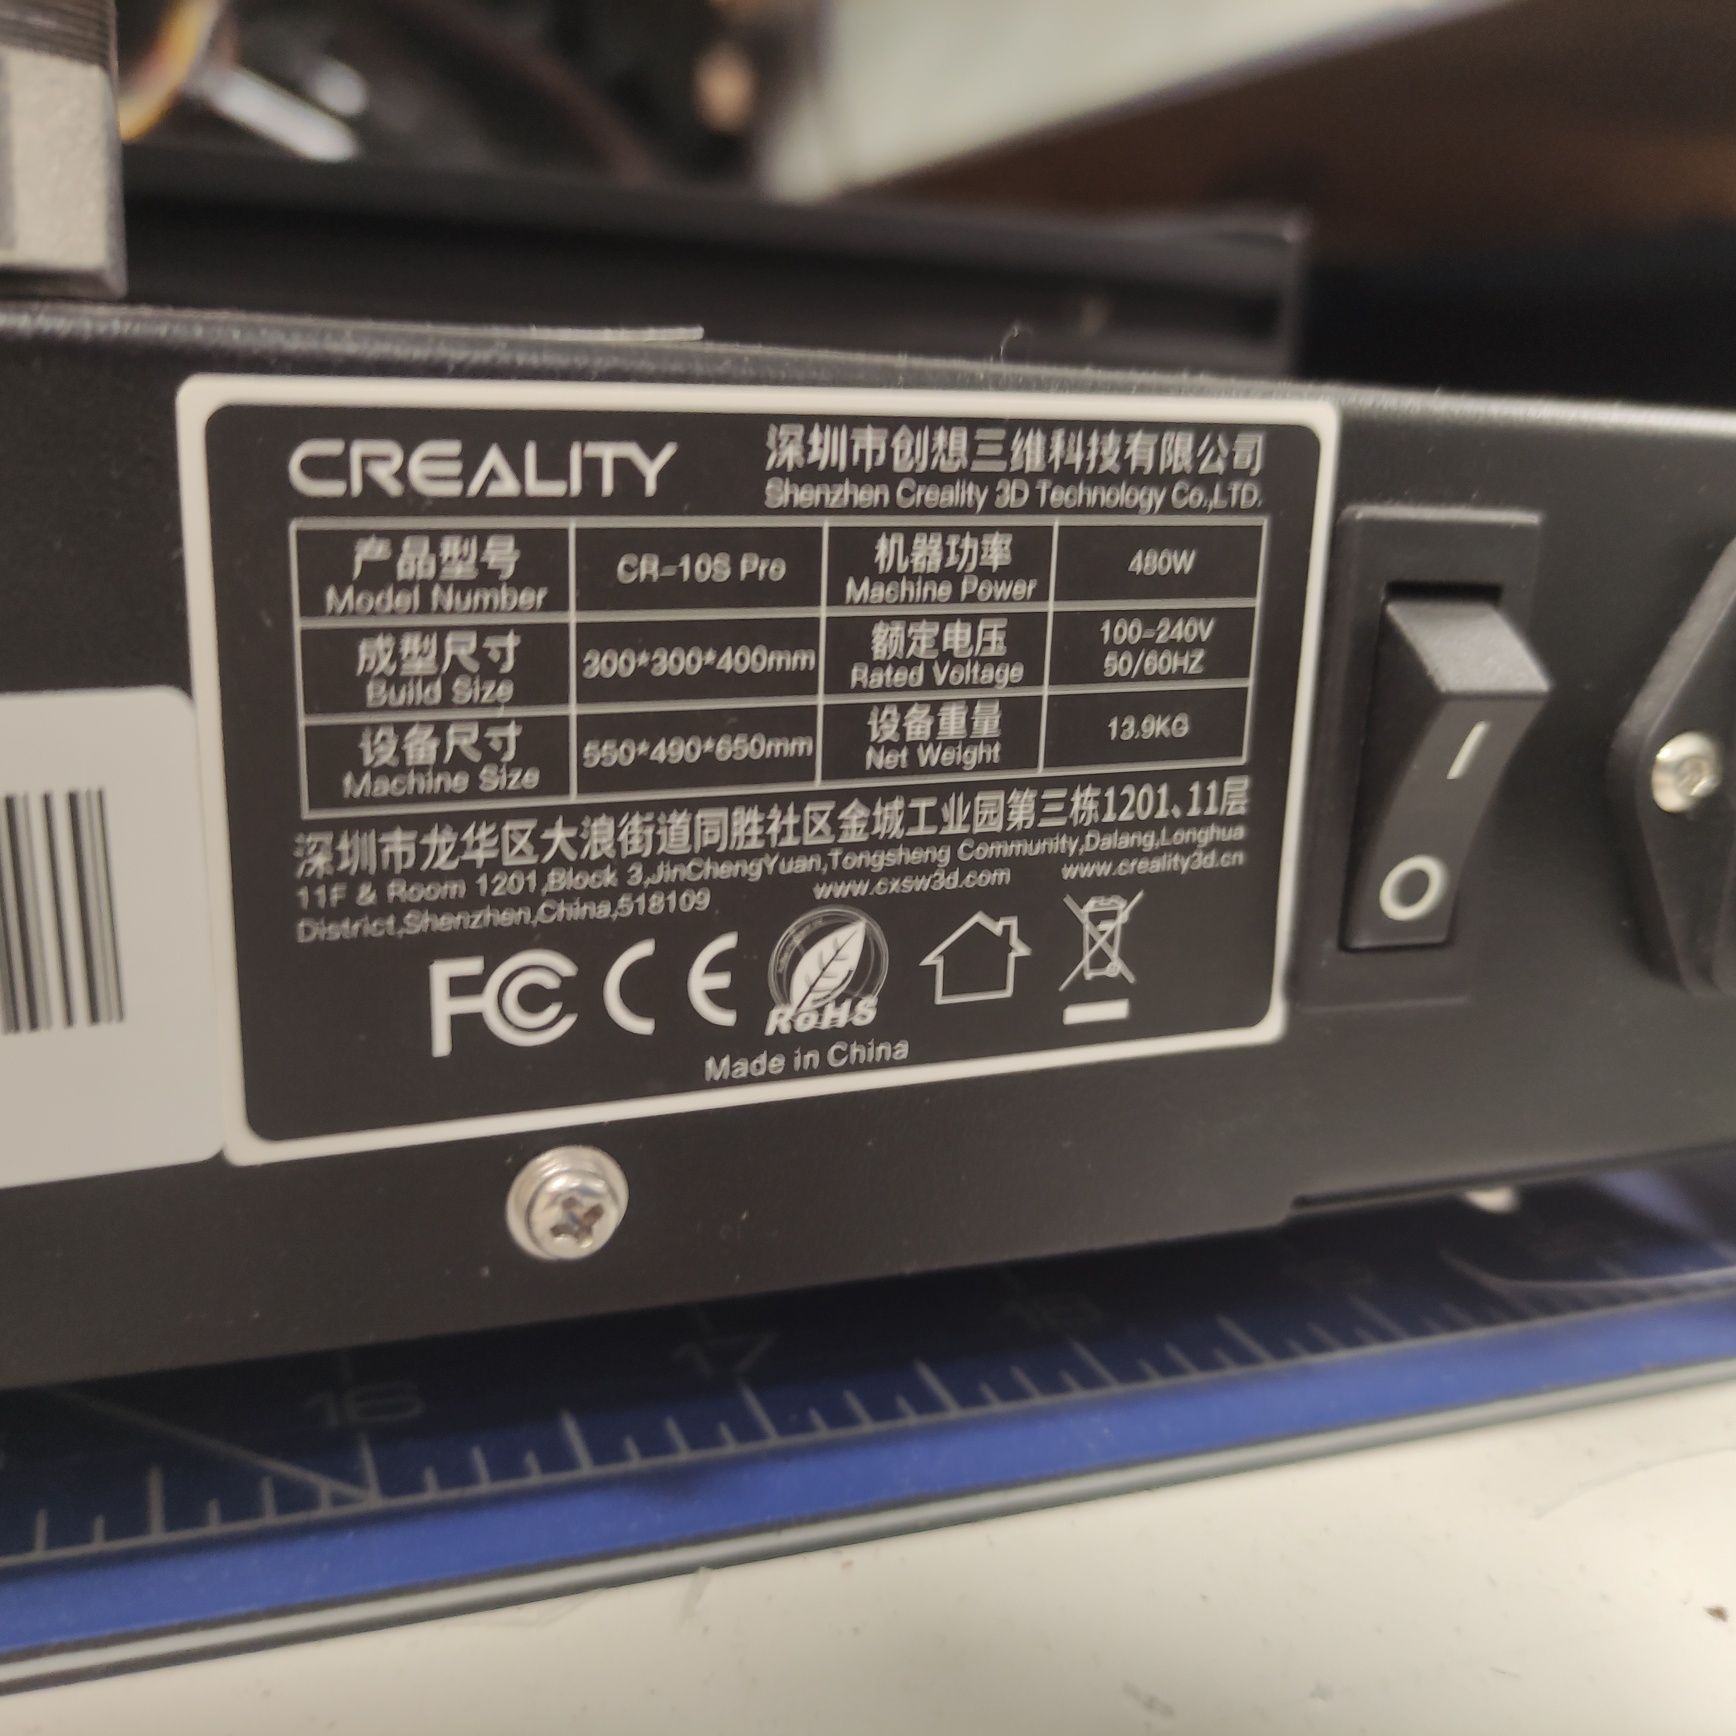 Creality CR 10S Pro